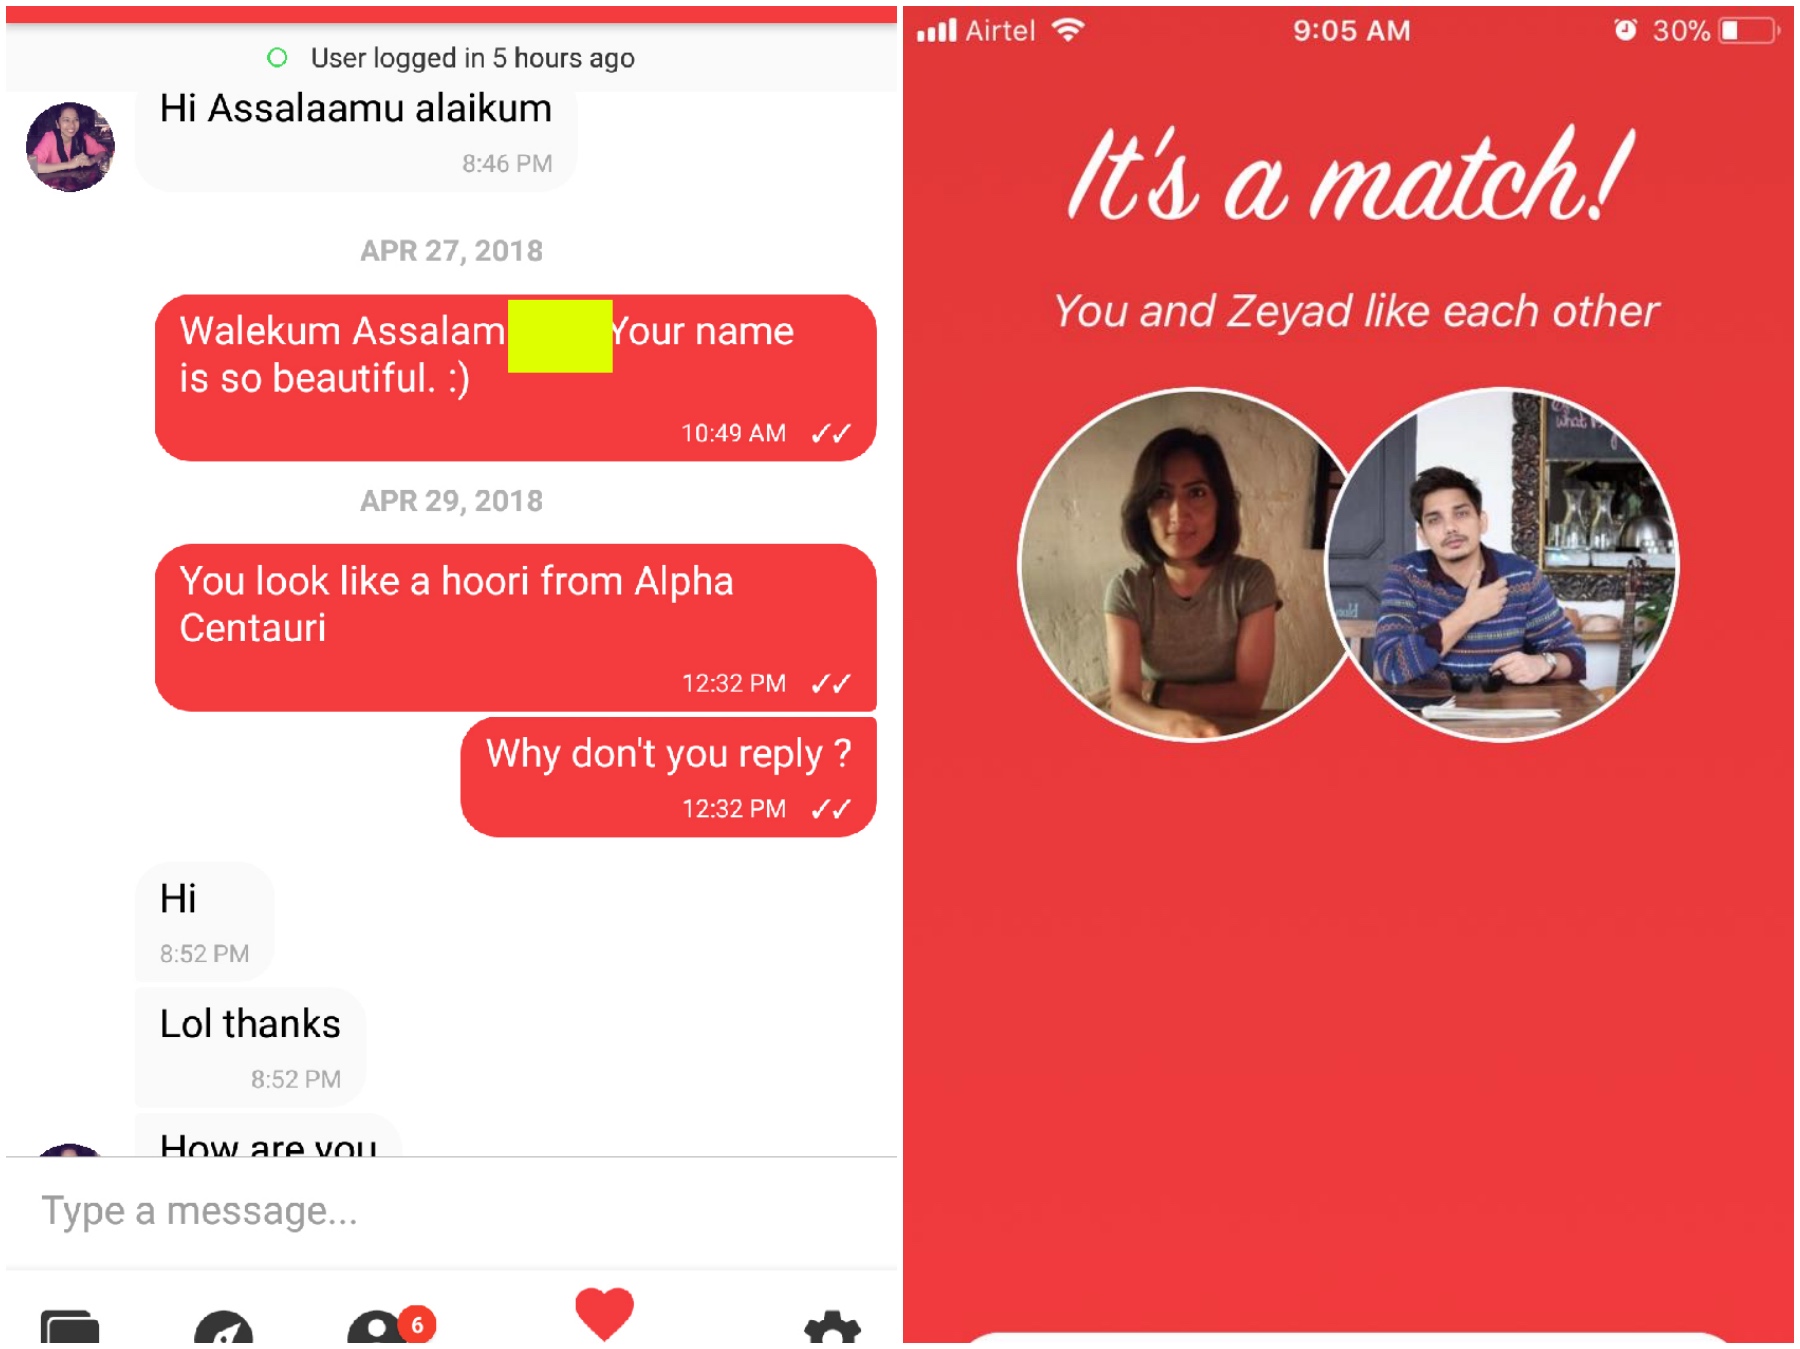 Muslim dating app Tinder